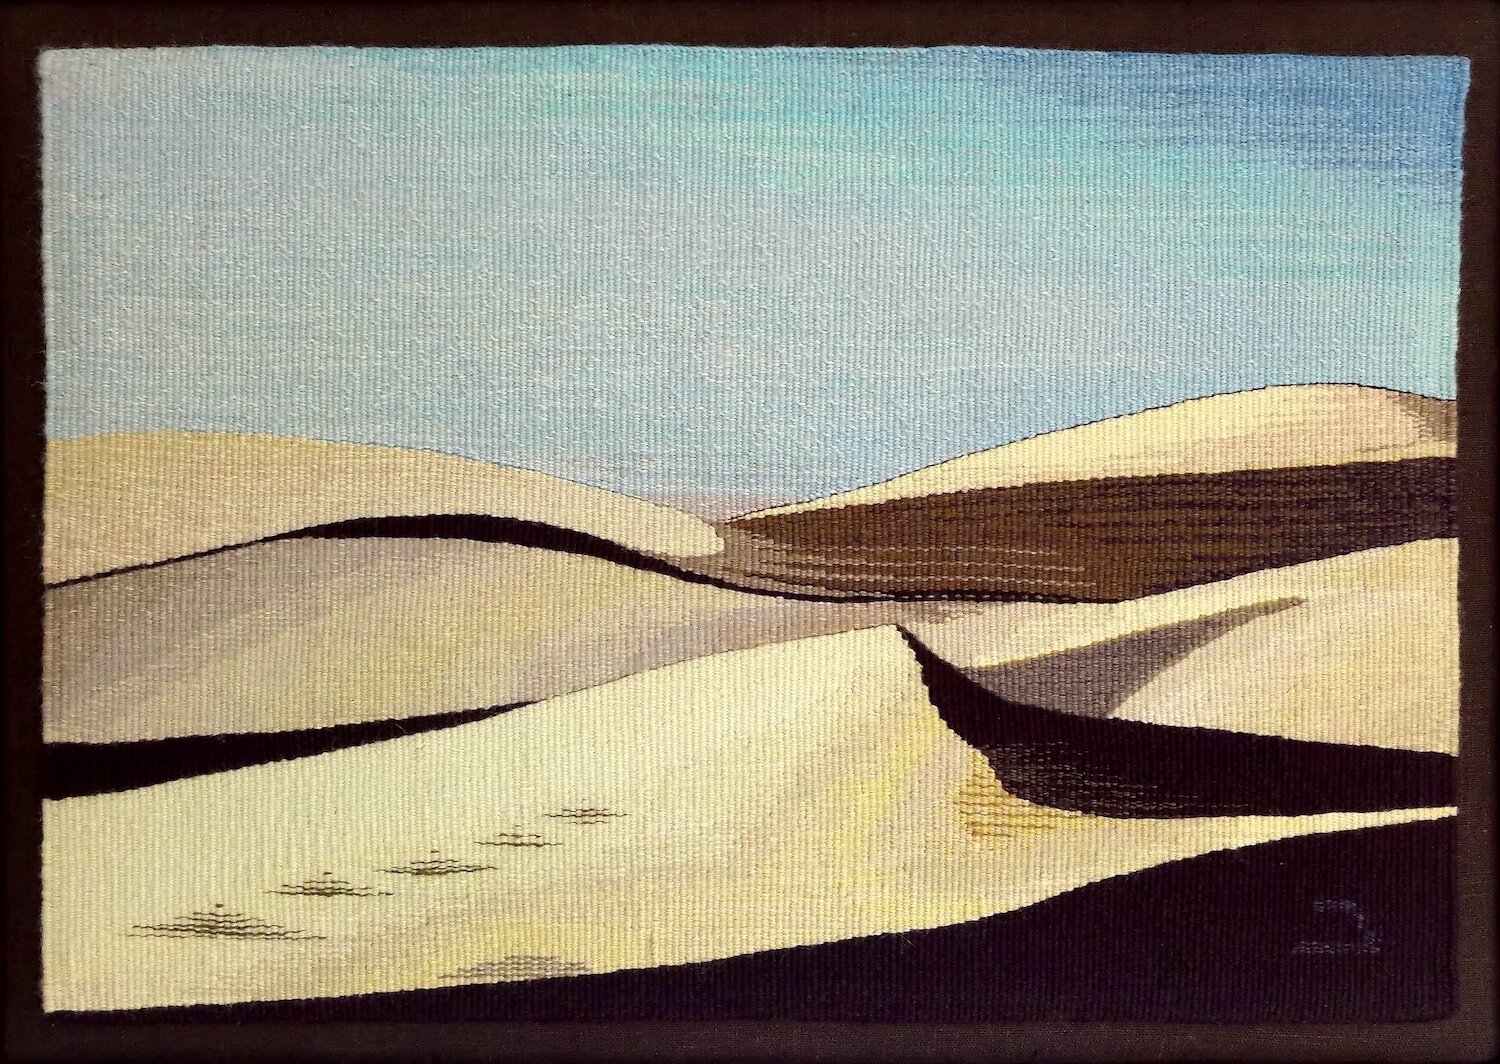 Sand Dunes I